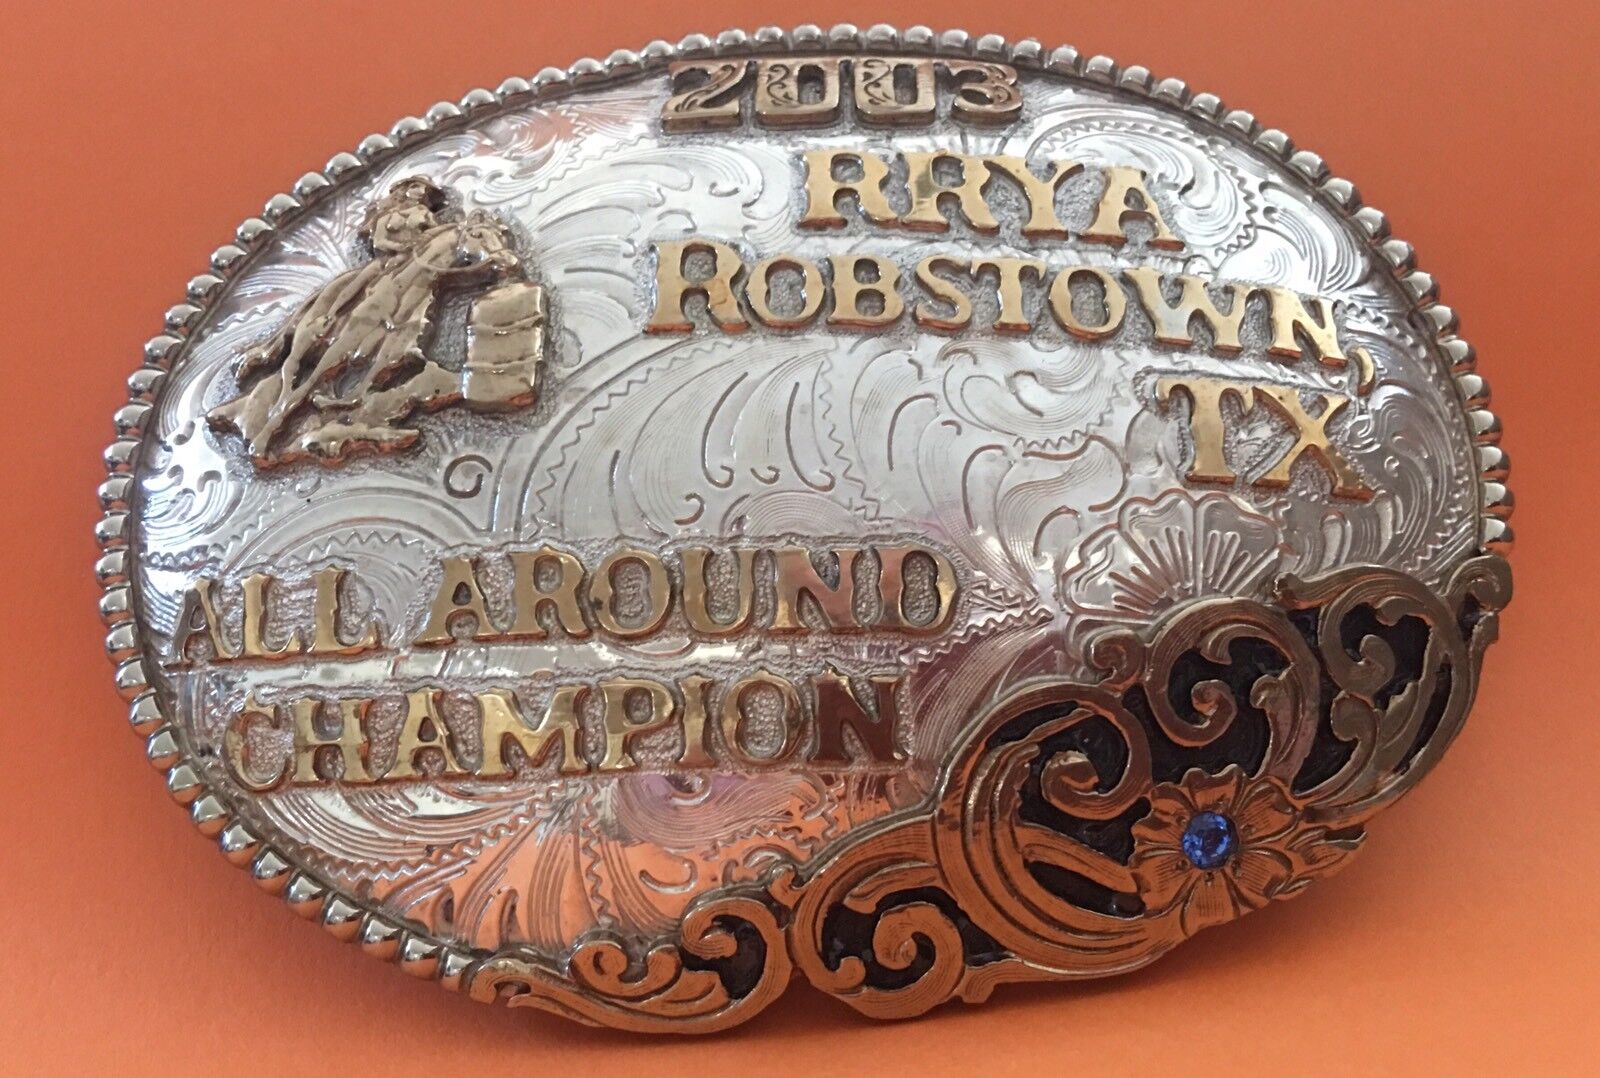 2003 RRYA Robstown Texas Rodeo Maynard Silver Champion Gem Trophy Belt Buckle